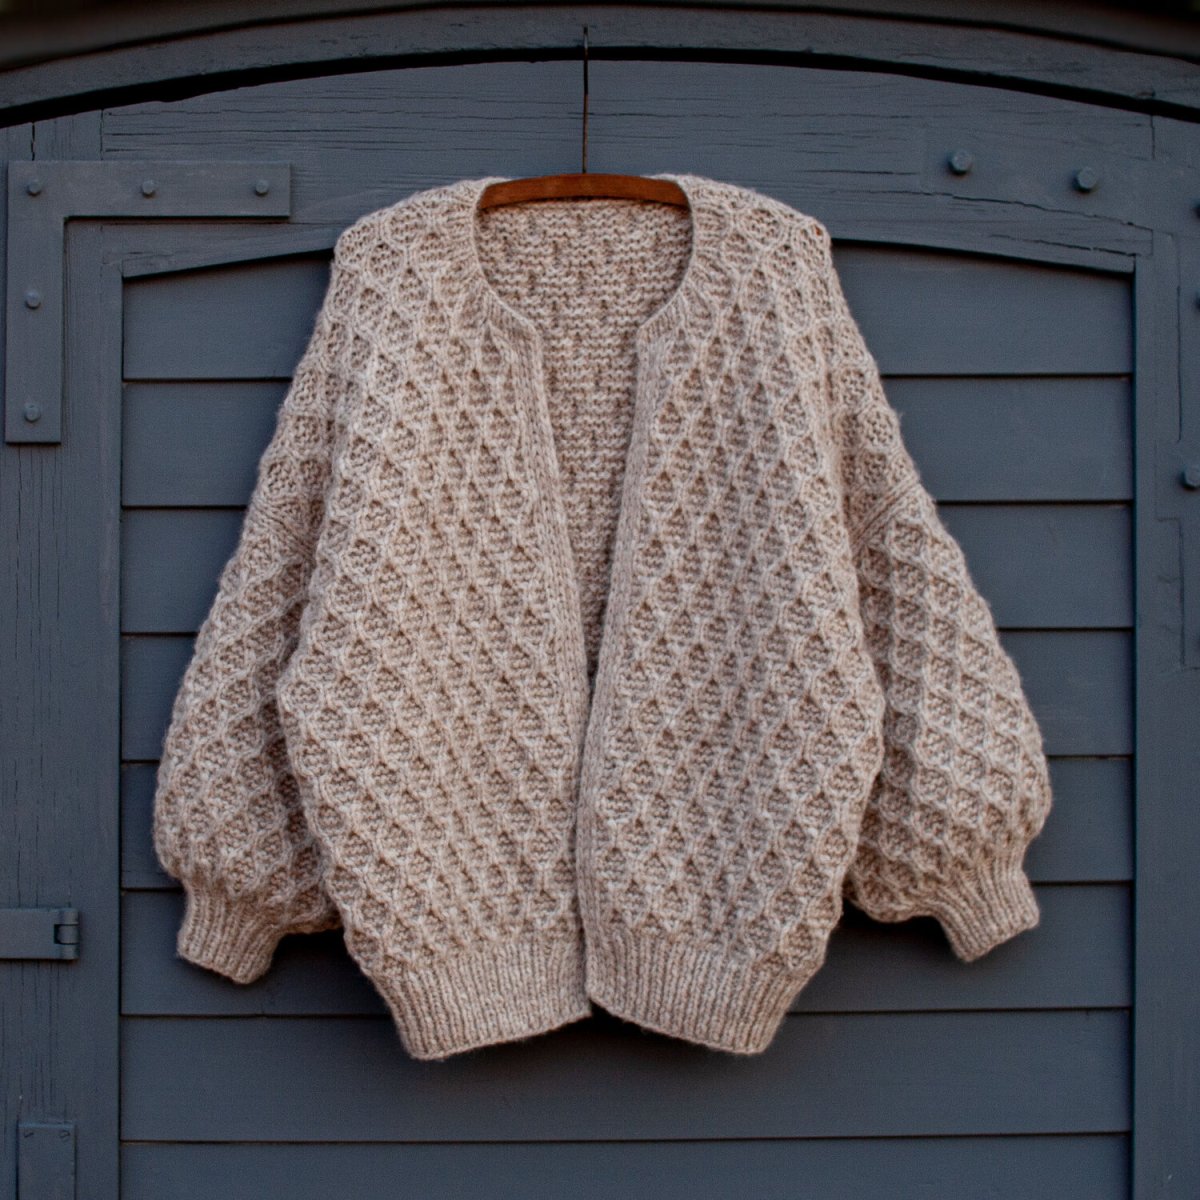 DIAMOND JACKET - English knitting pattern by Anne Ventzel